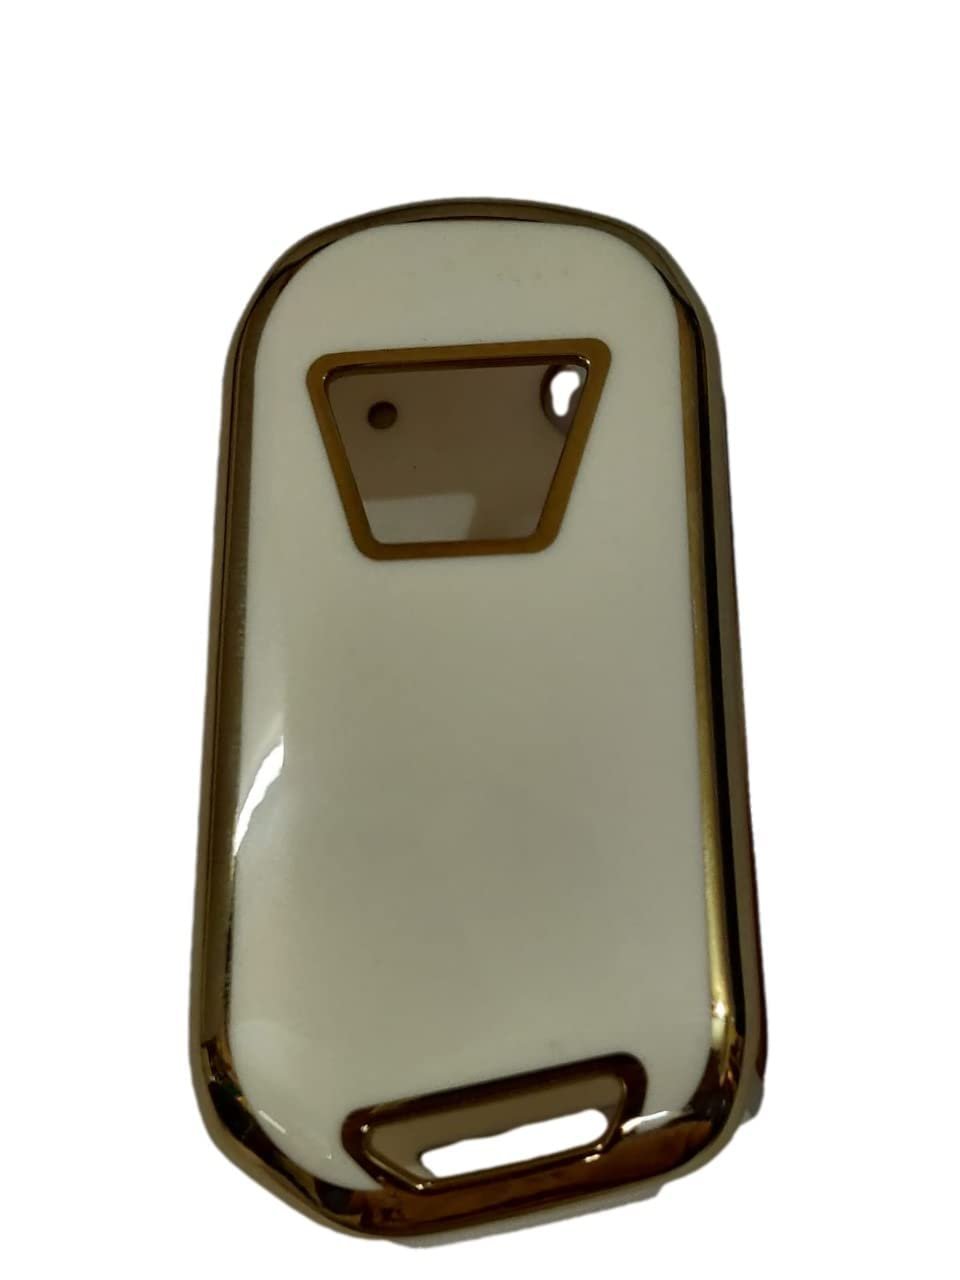 TPU Silicone key Cover For Compatible With For New Mahindra Scorpio 2022, XUV 700, Thar 2020, Tuv-300, Marazzo, Scorpio 2019, Bolero 2020 Flip Key (White, Pack of 2) Image 